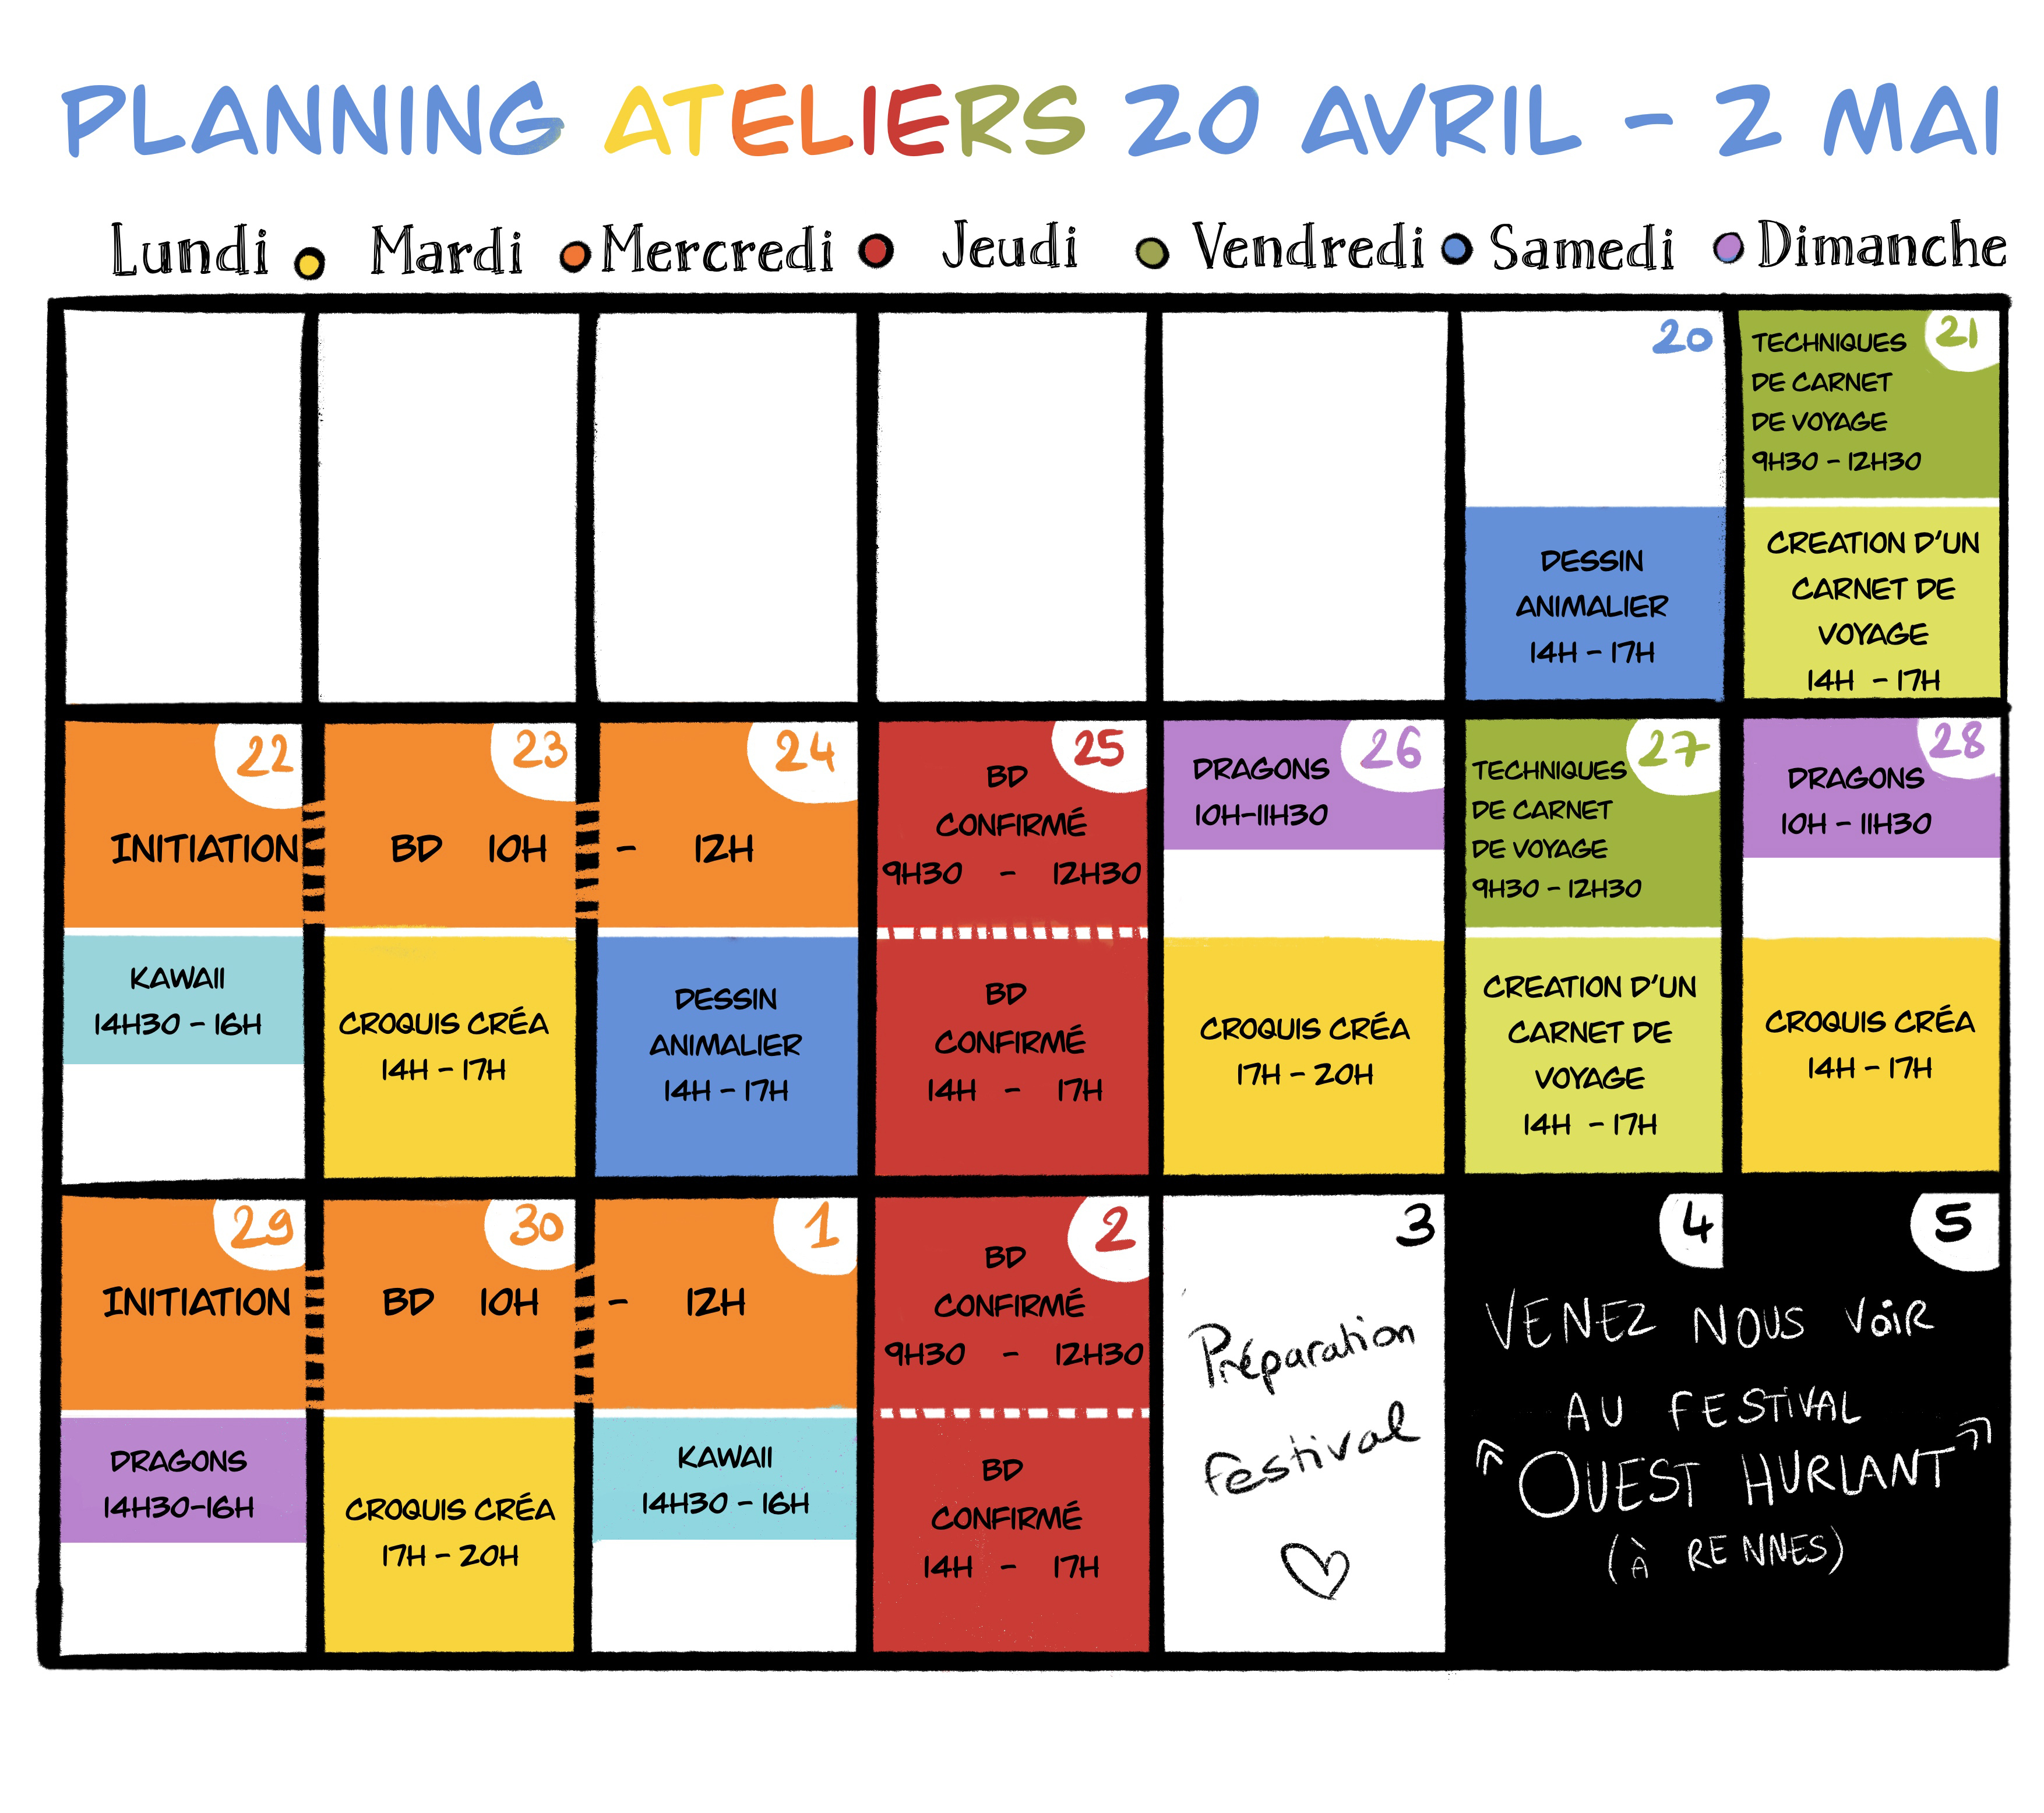 Planning 20 avril 2 mai